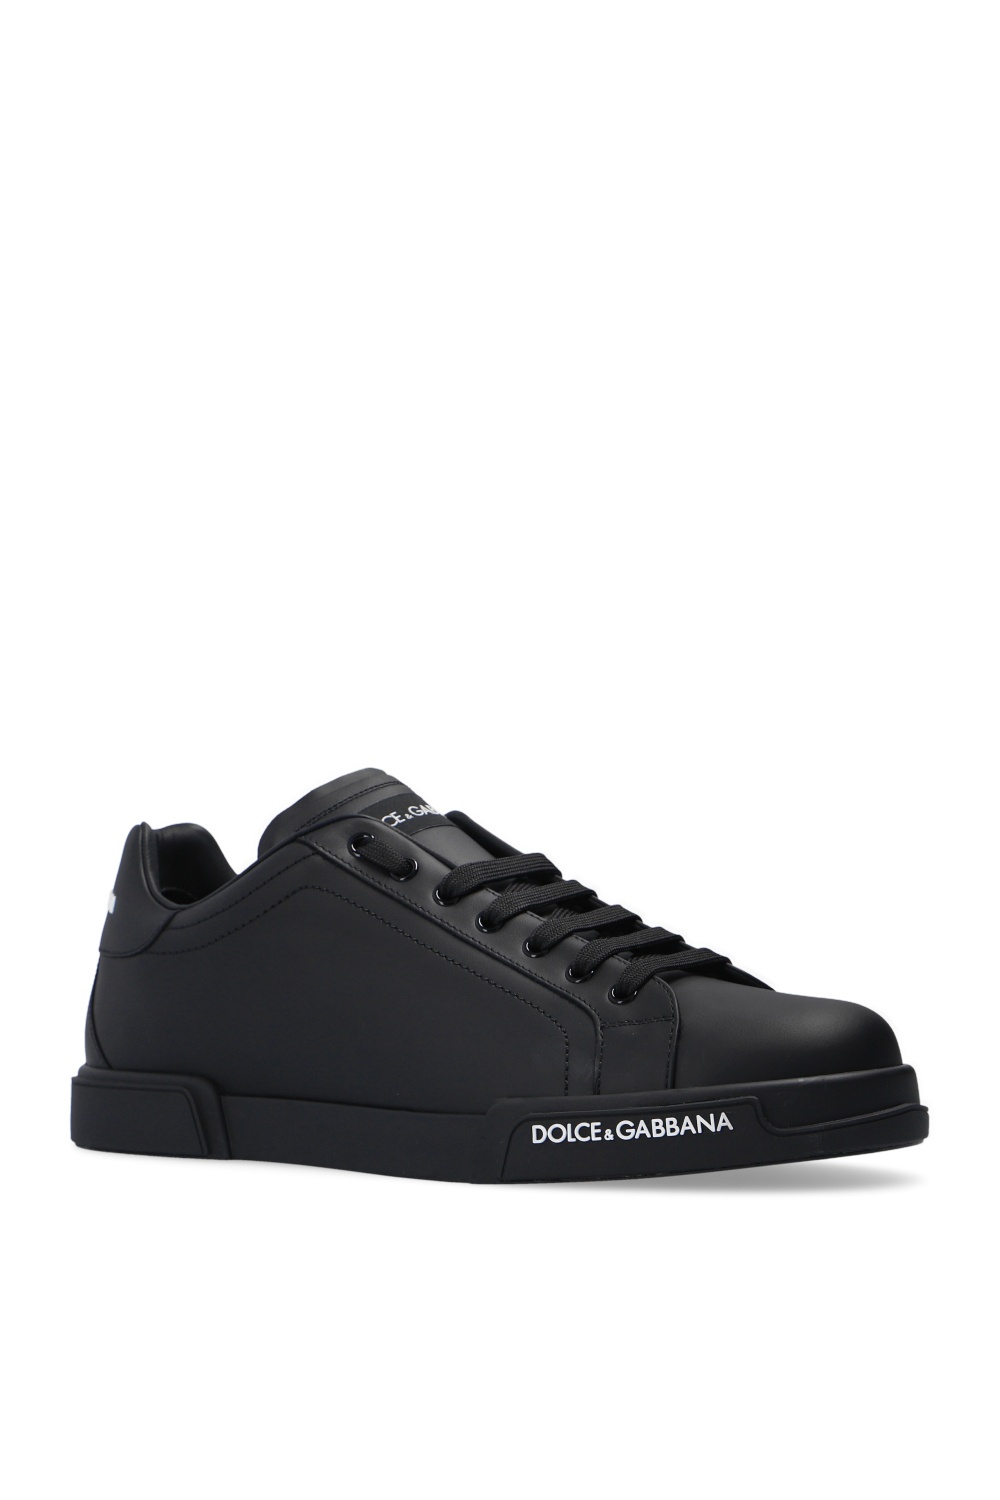 dolce earlier & Gabbana ‘Portofino’ sneakers